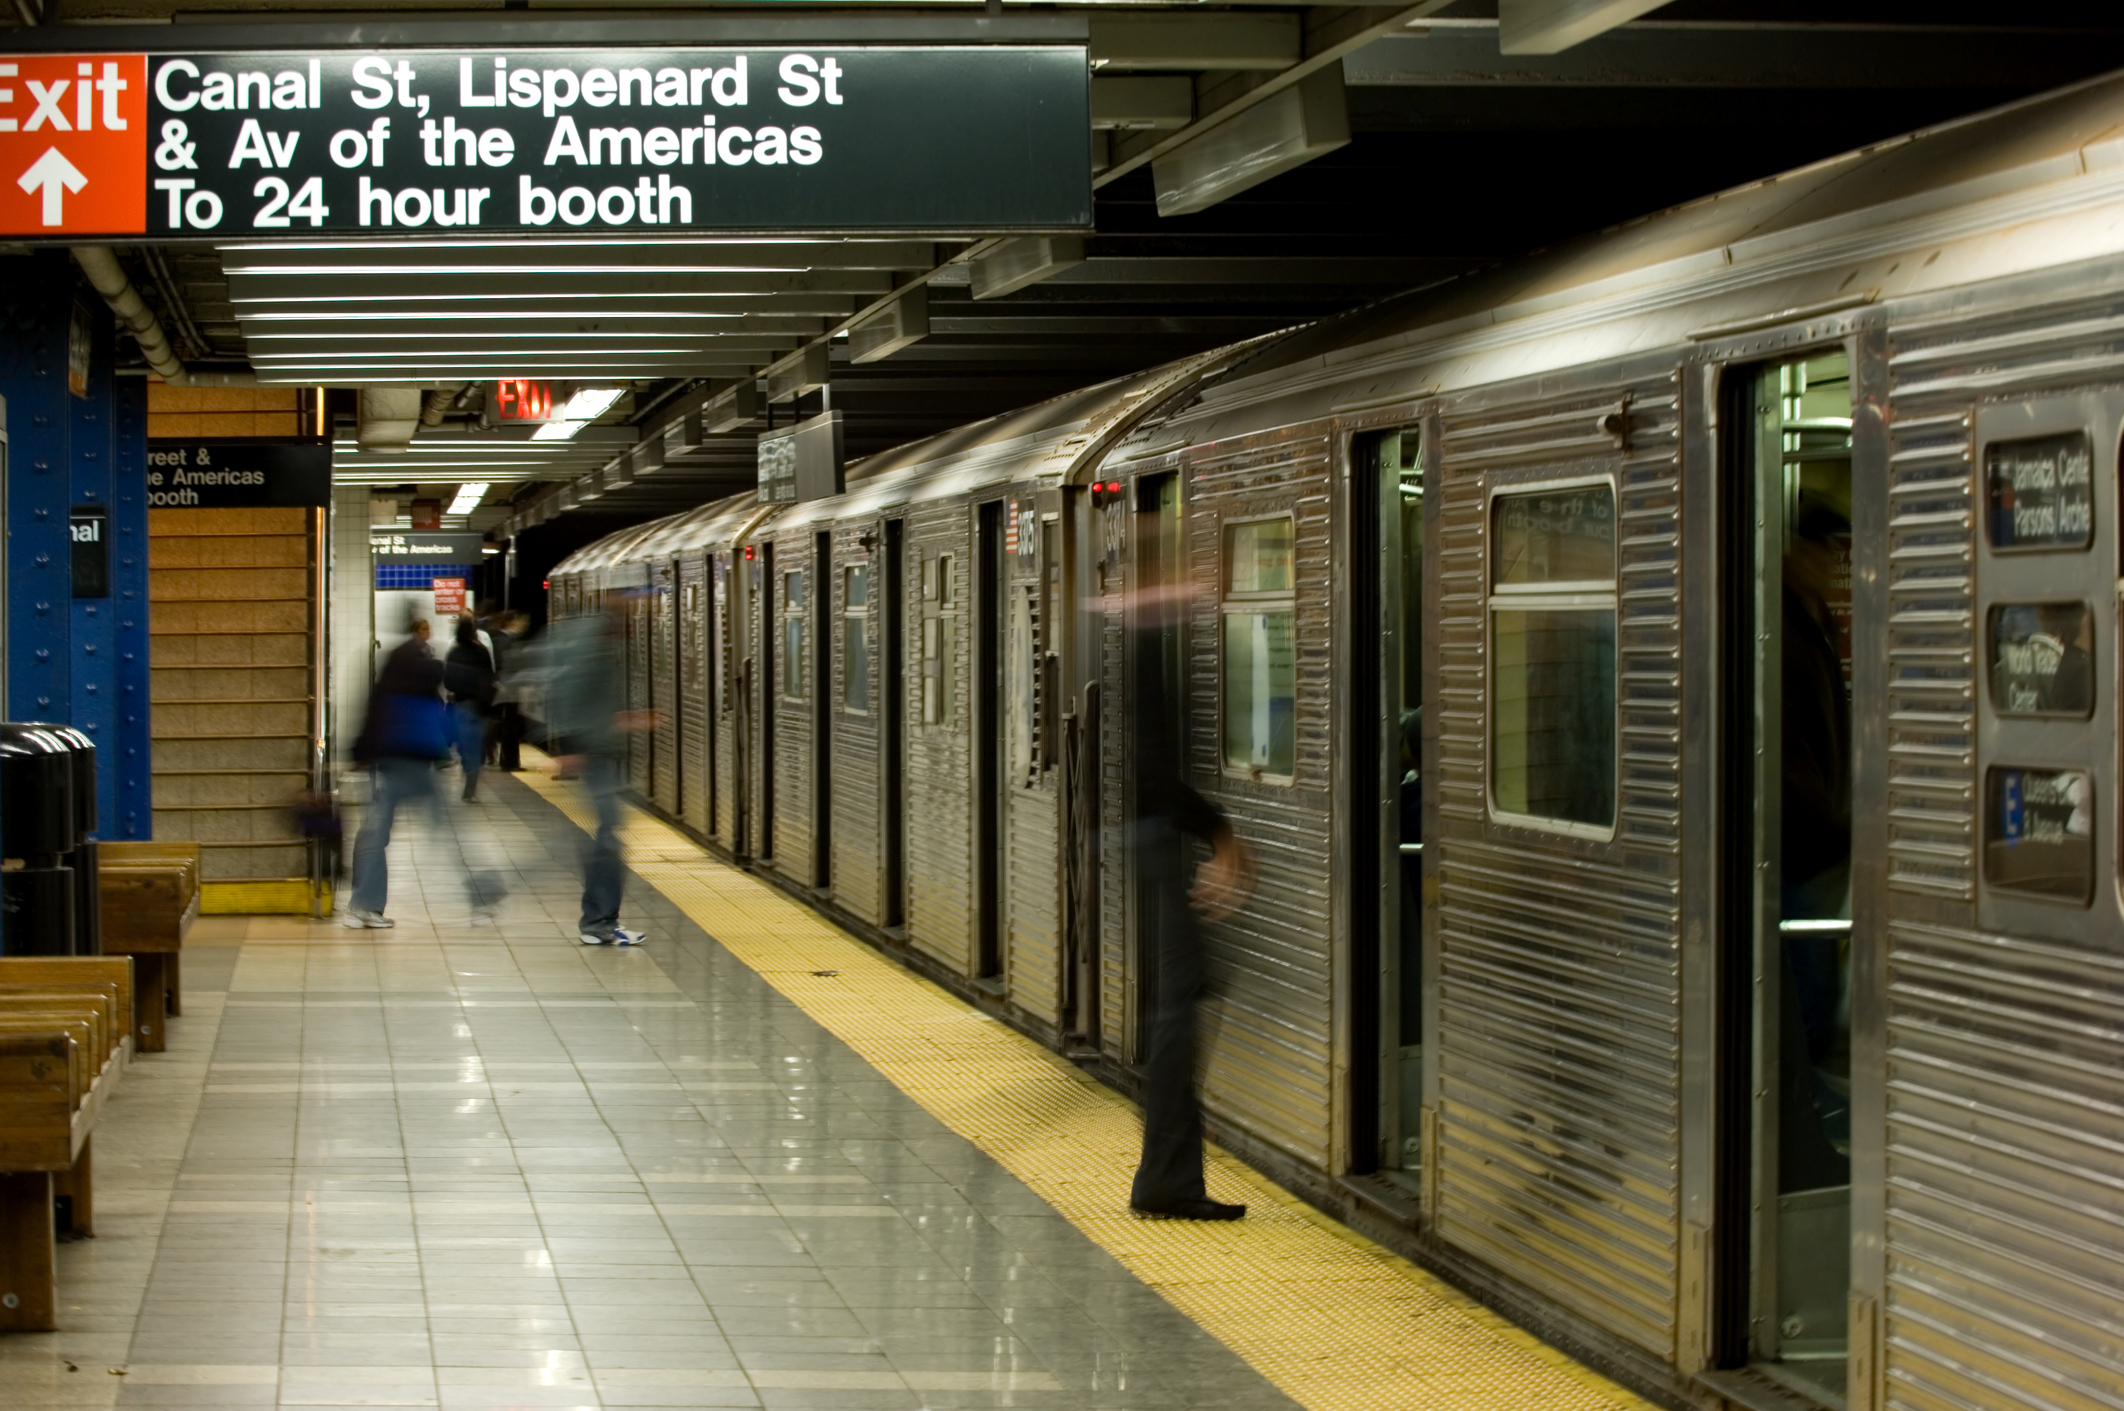 blurry people on the subway platform